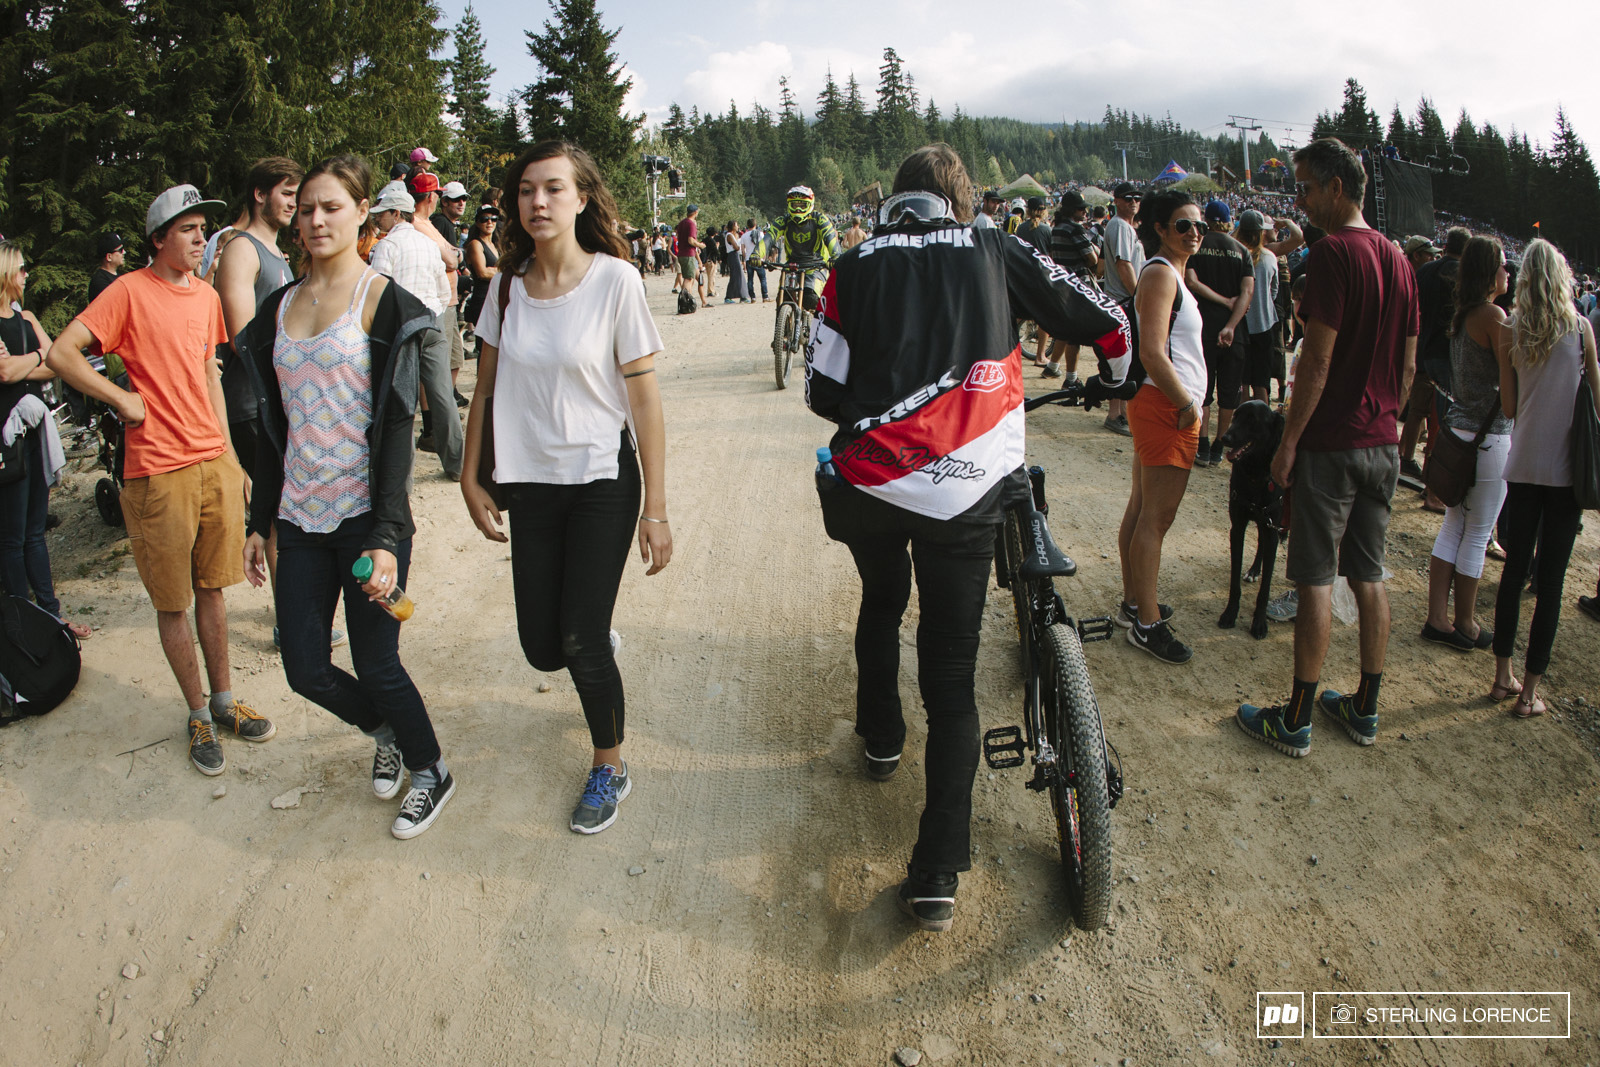 Brandon Semenuk choosing to walk to the top at 2014 Joyride at Crankworx, Whistler, BC